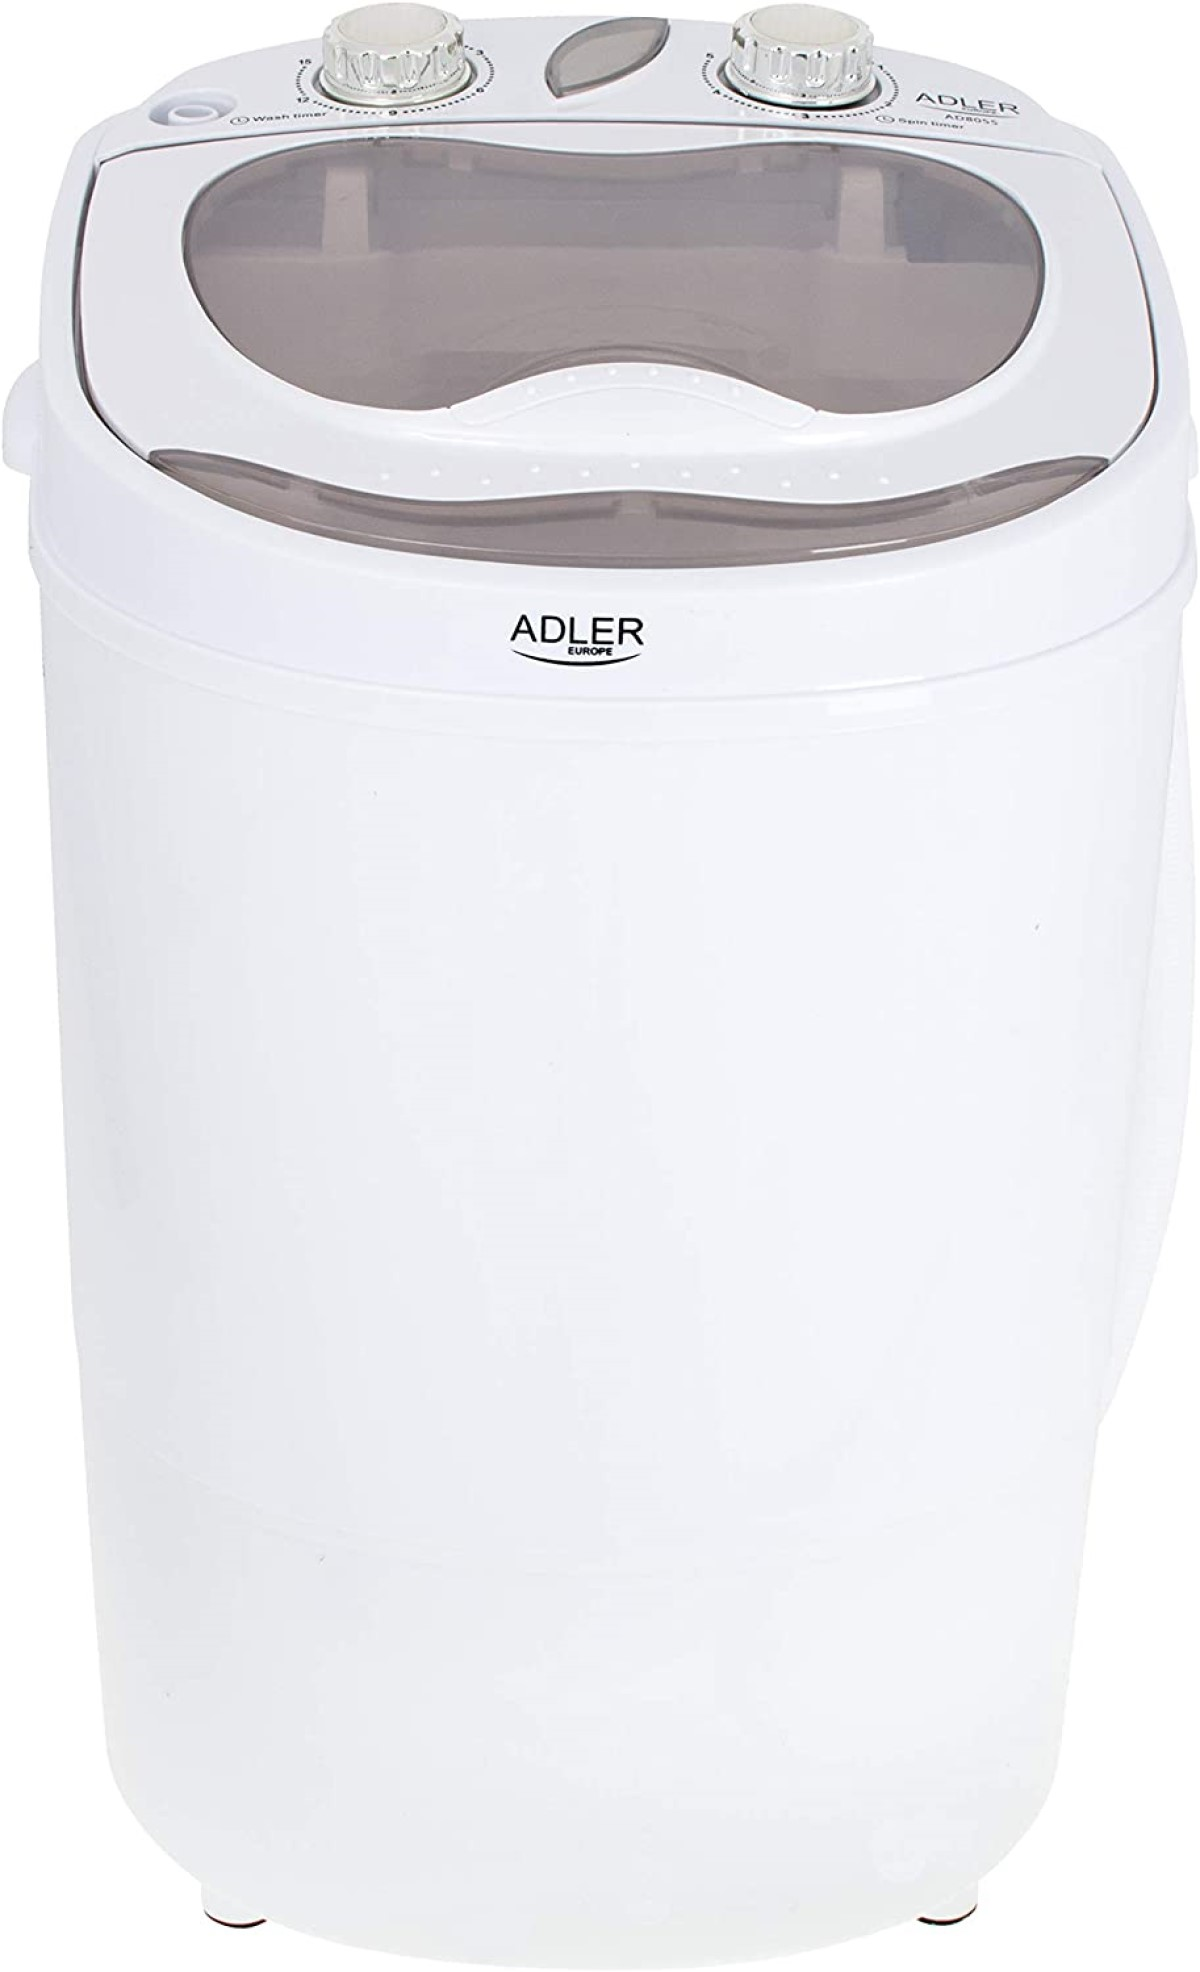 JUNG ADLER AD8055 ADLER kg, (3 -) Waschmaschine Mini